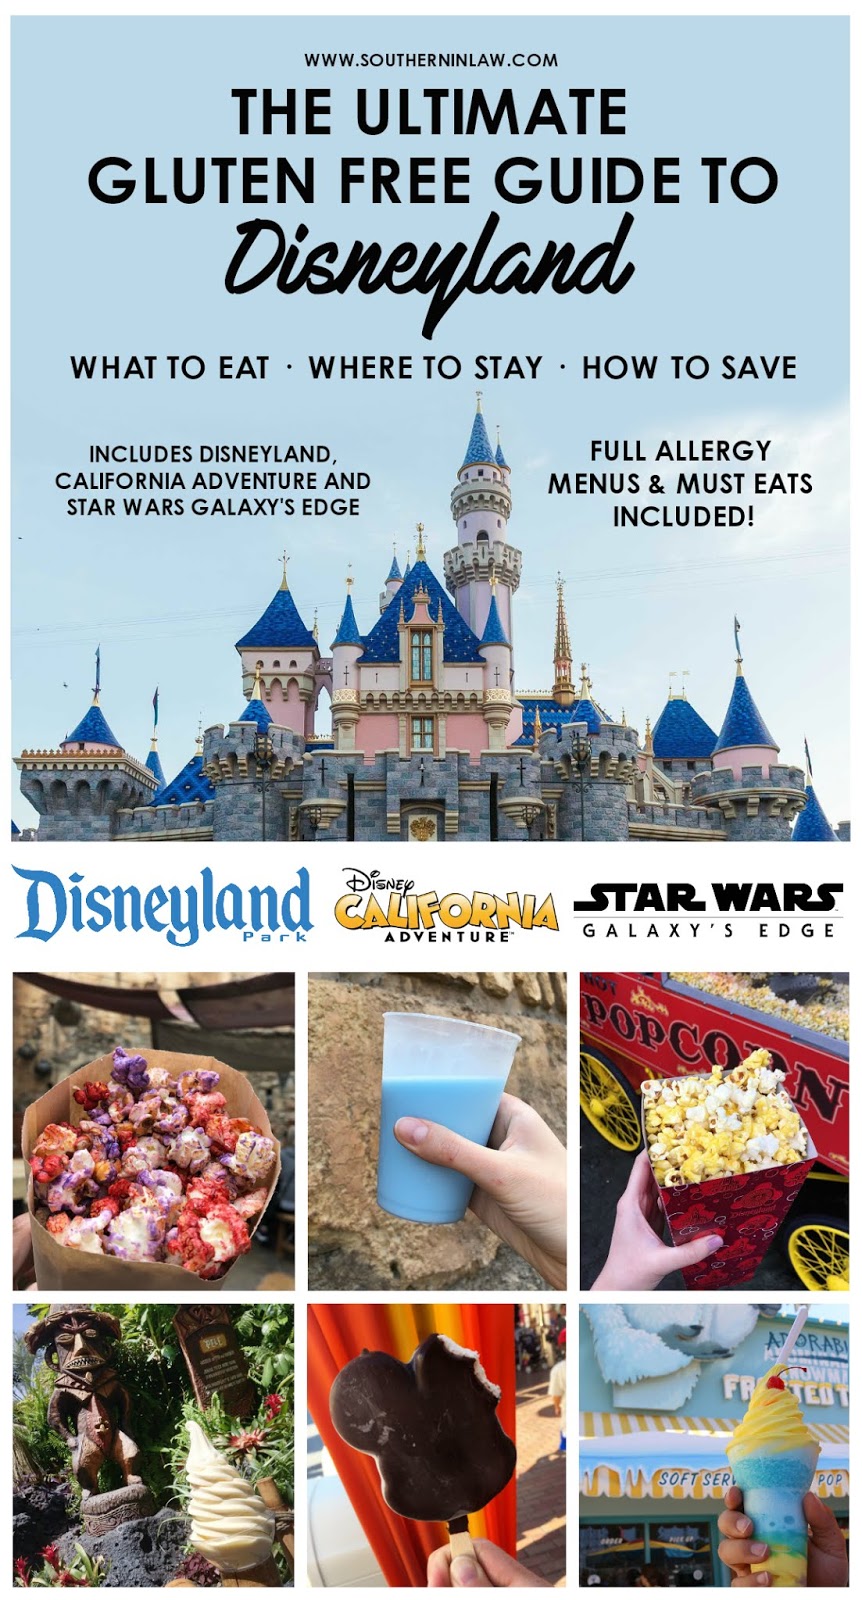 The Ultimate Gluten Free Guide to Disneyland - How to Eat Gluten Free at Disneyland, California Adventure, Star Wars Galaxy's Edge - Disneyland Allergy Menus Download